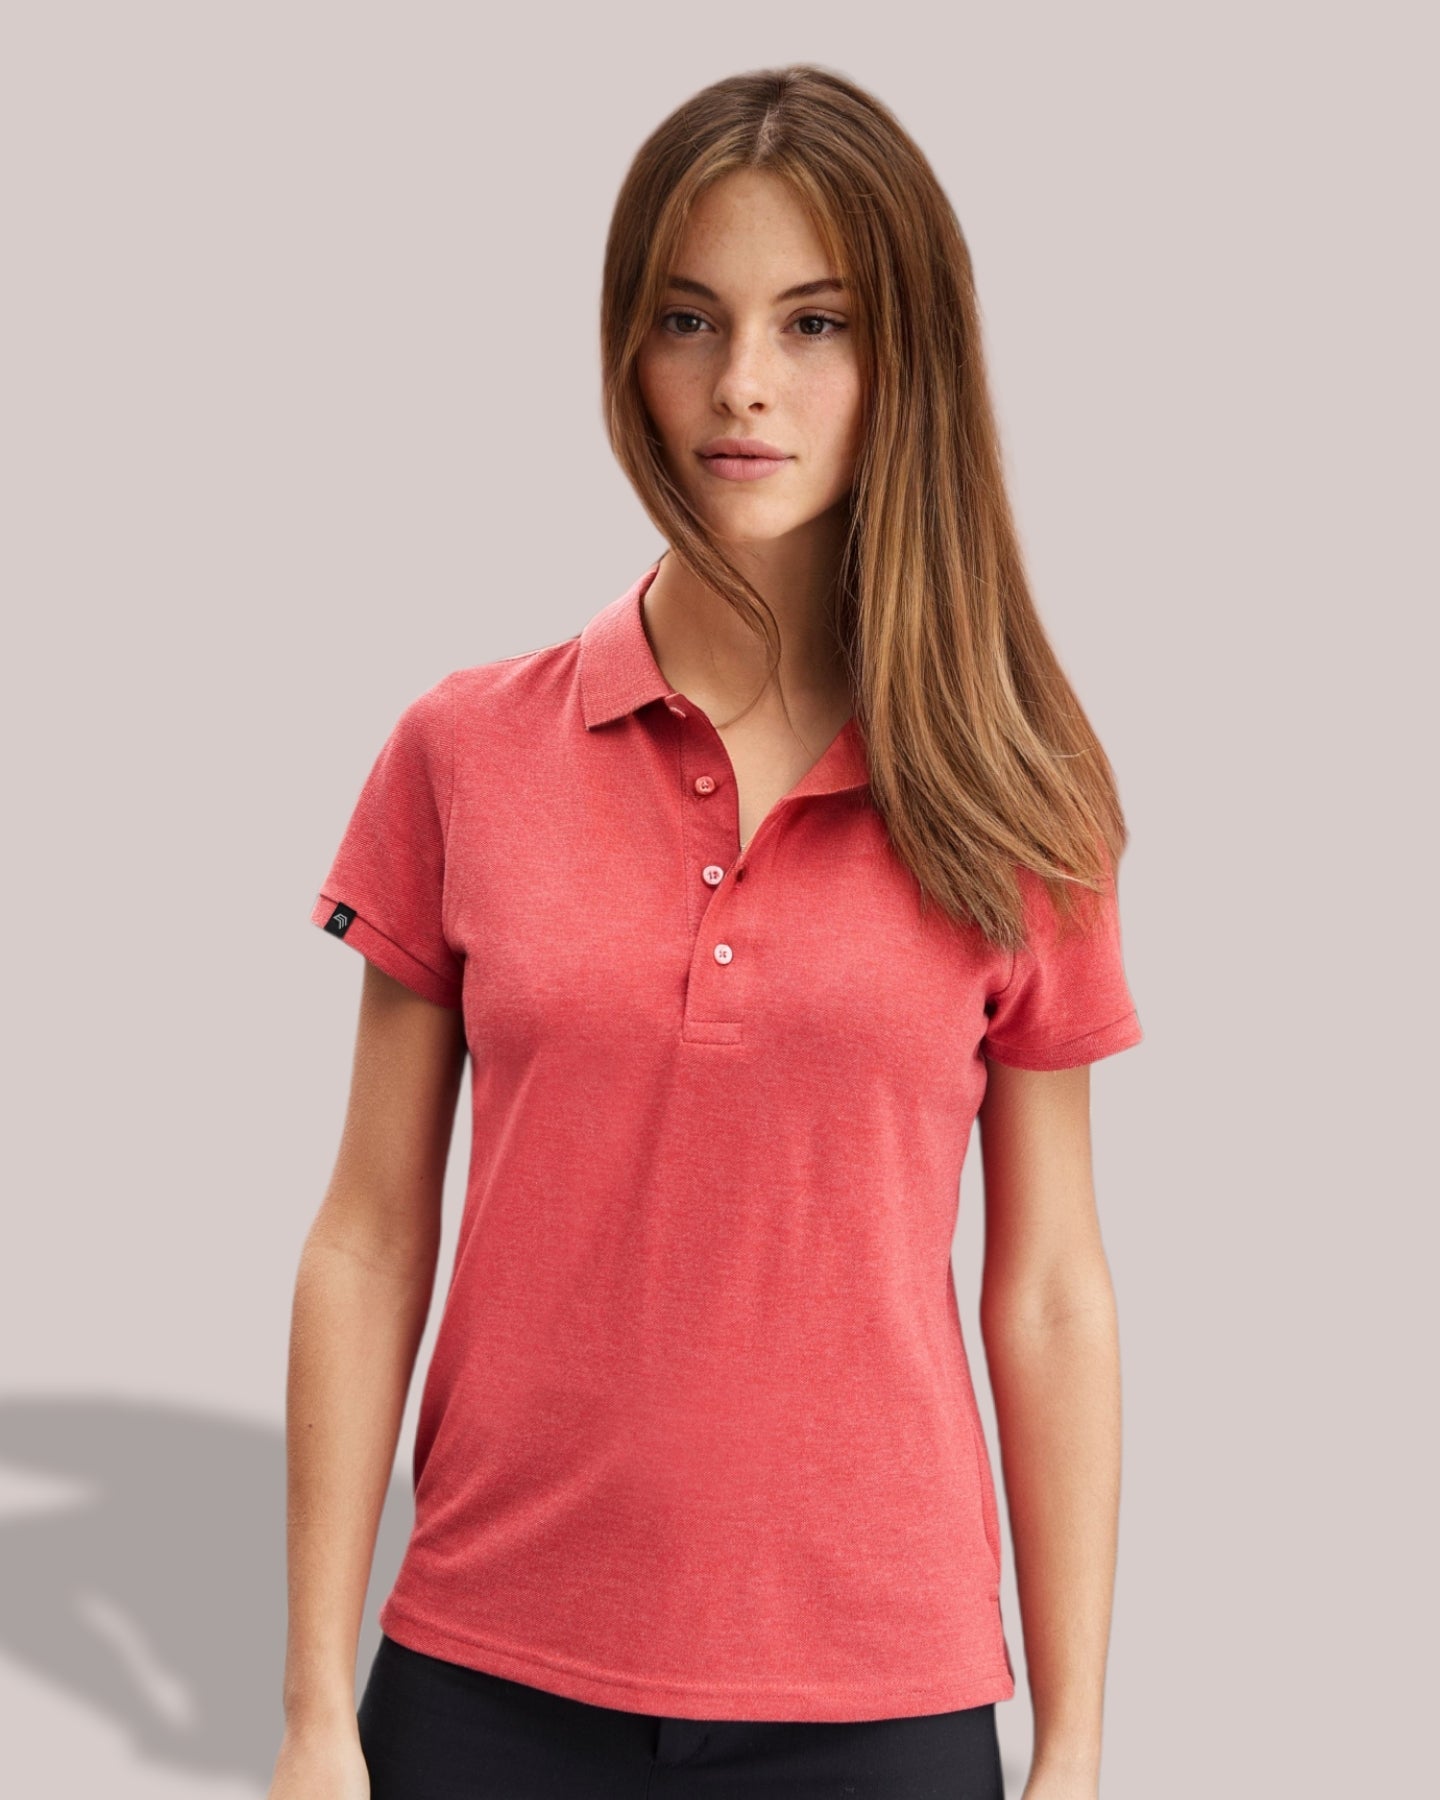 ― % ― JAN 8009 ― Damen Bio-Baumwolle Polo Shirt - Gelb [S]